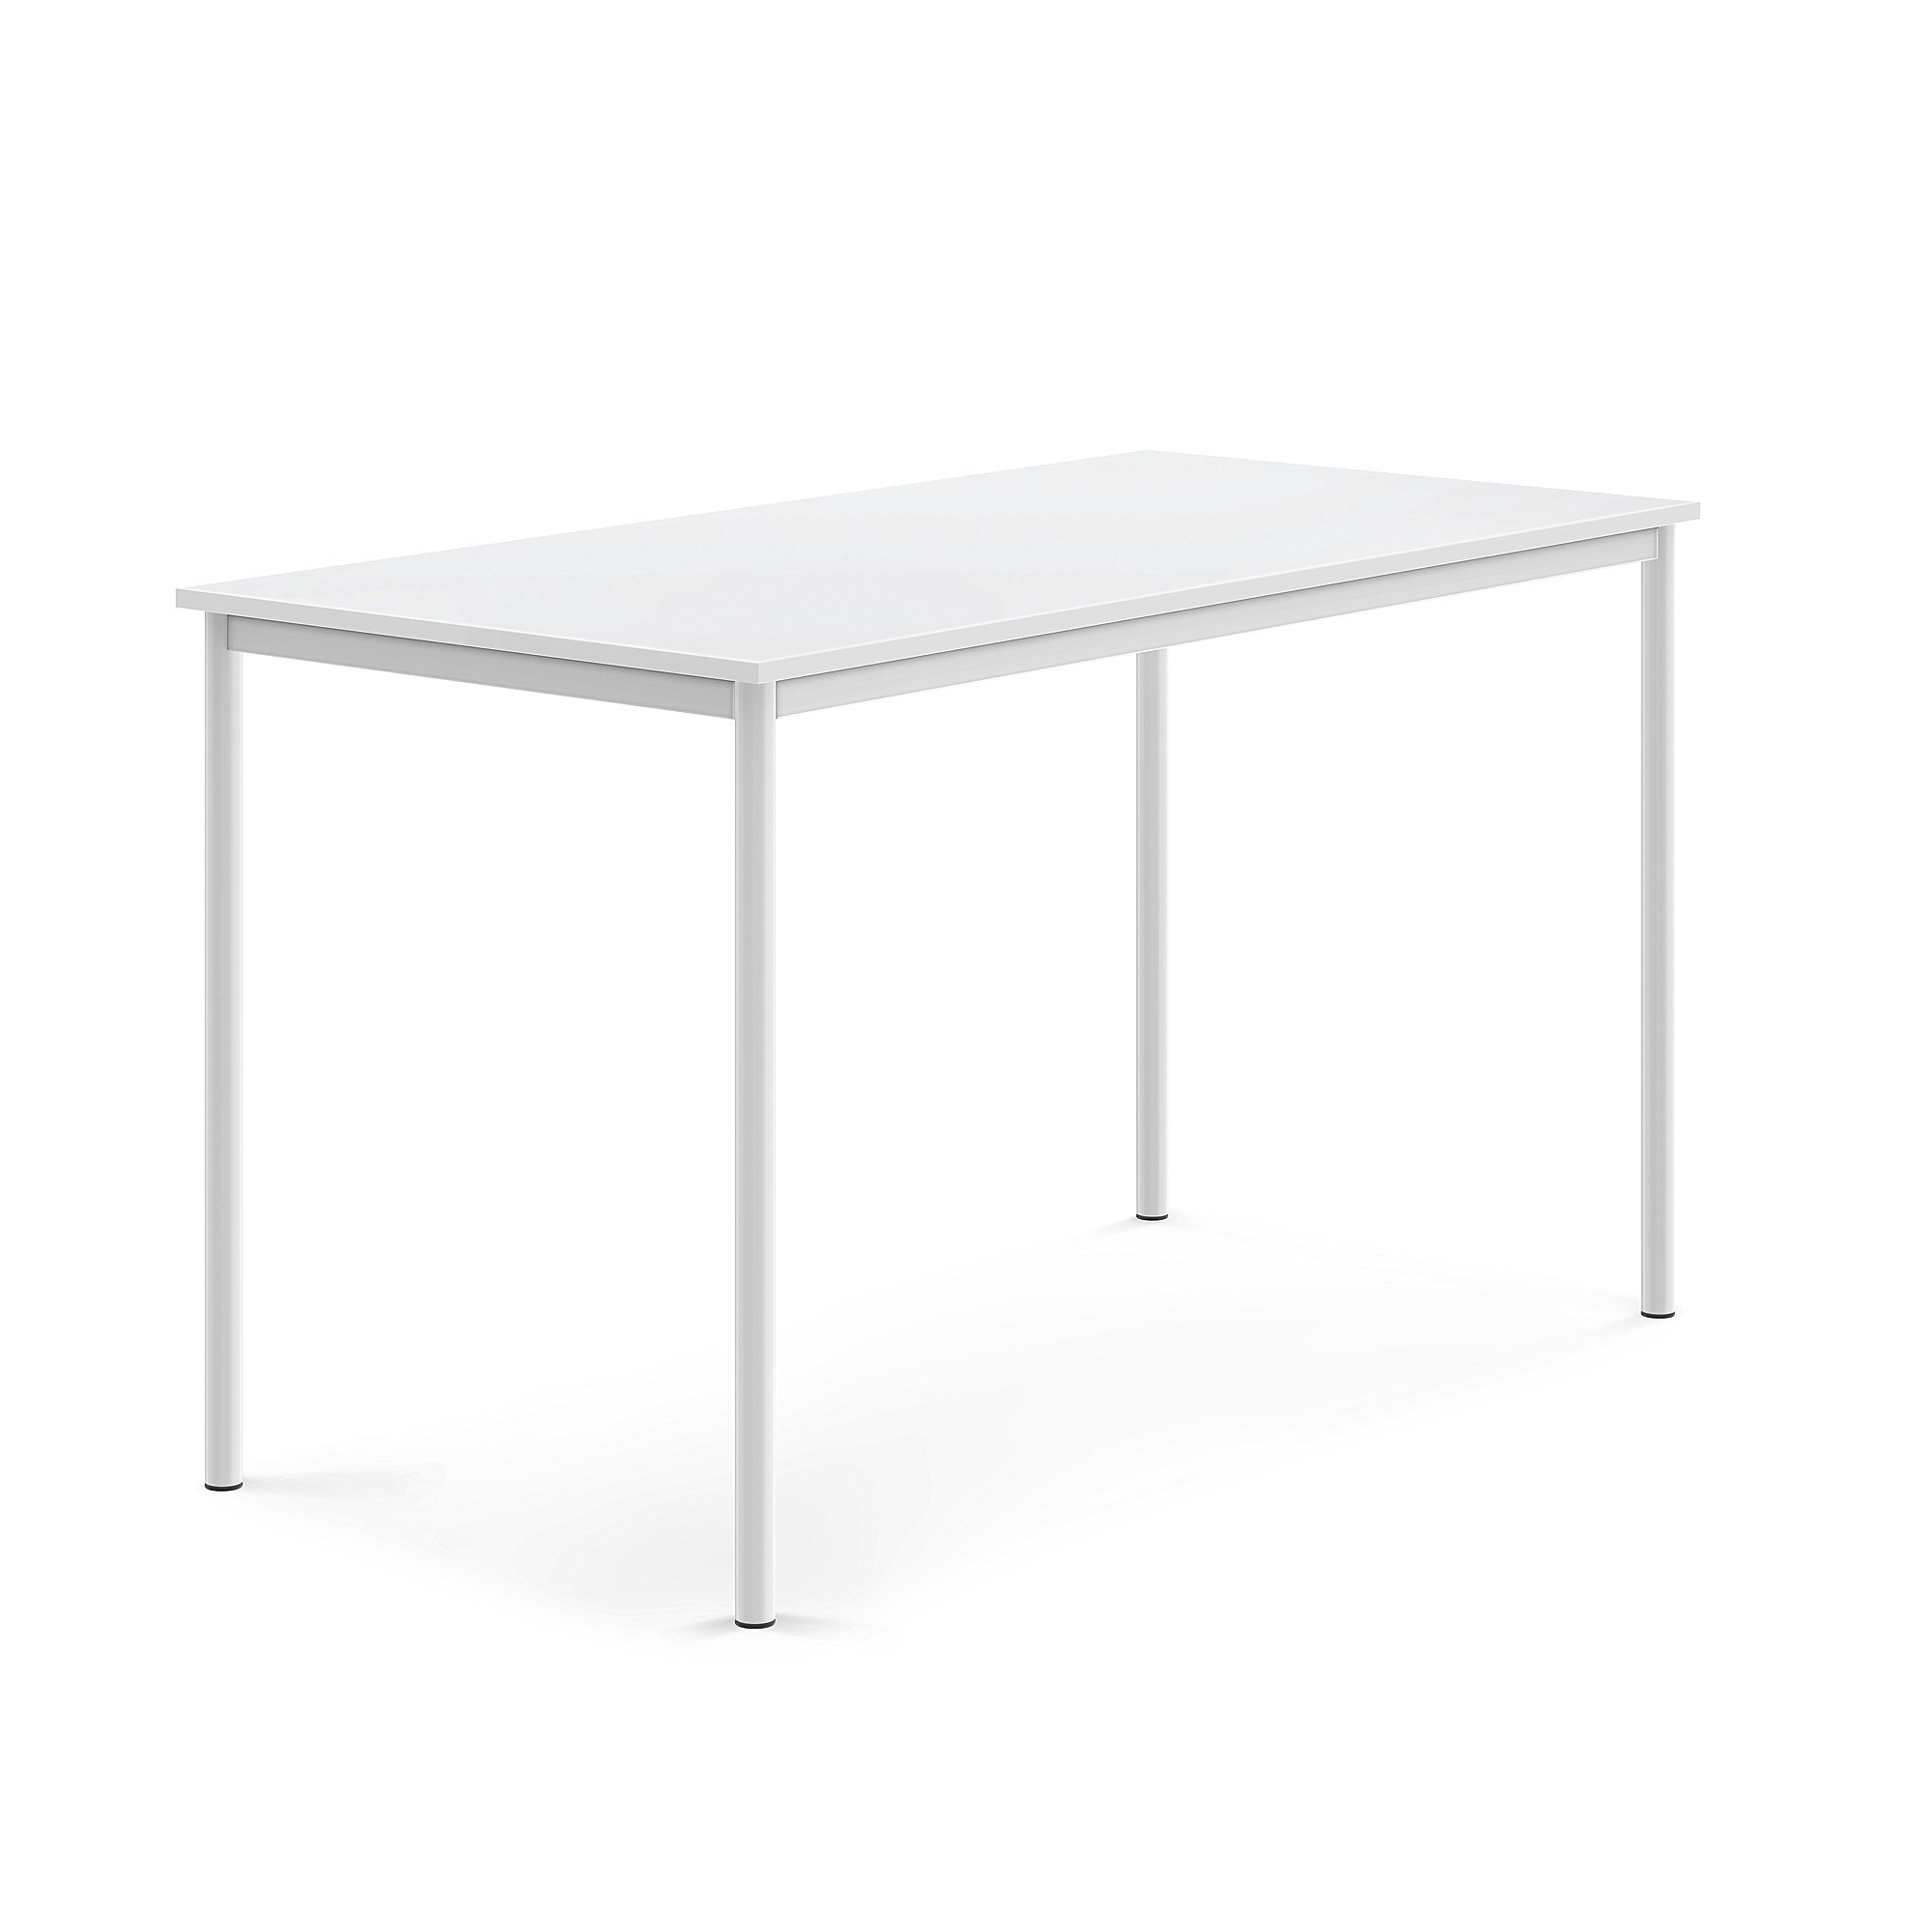 Stůl SONITUS, 1600x800x900 mm, bílé nohy, HPL deska tlumící hluk, bílá